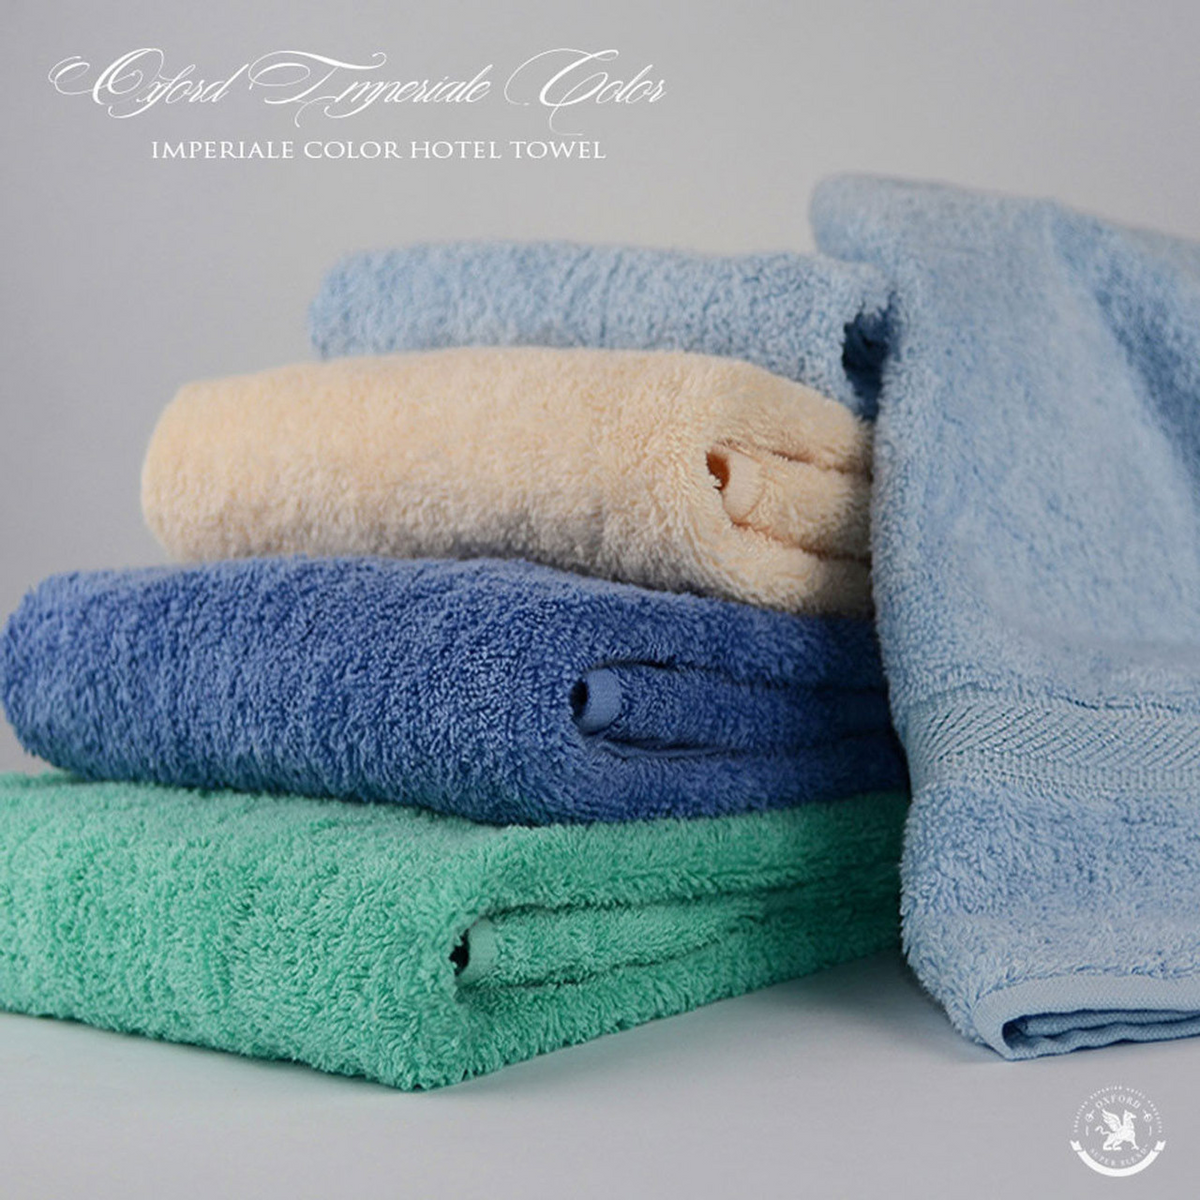 Bath Towel - Oxford Imperiale Color Towel